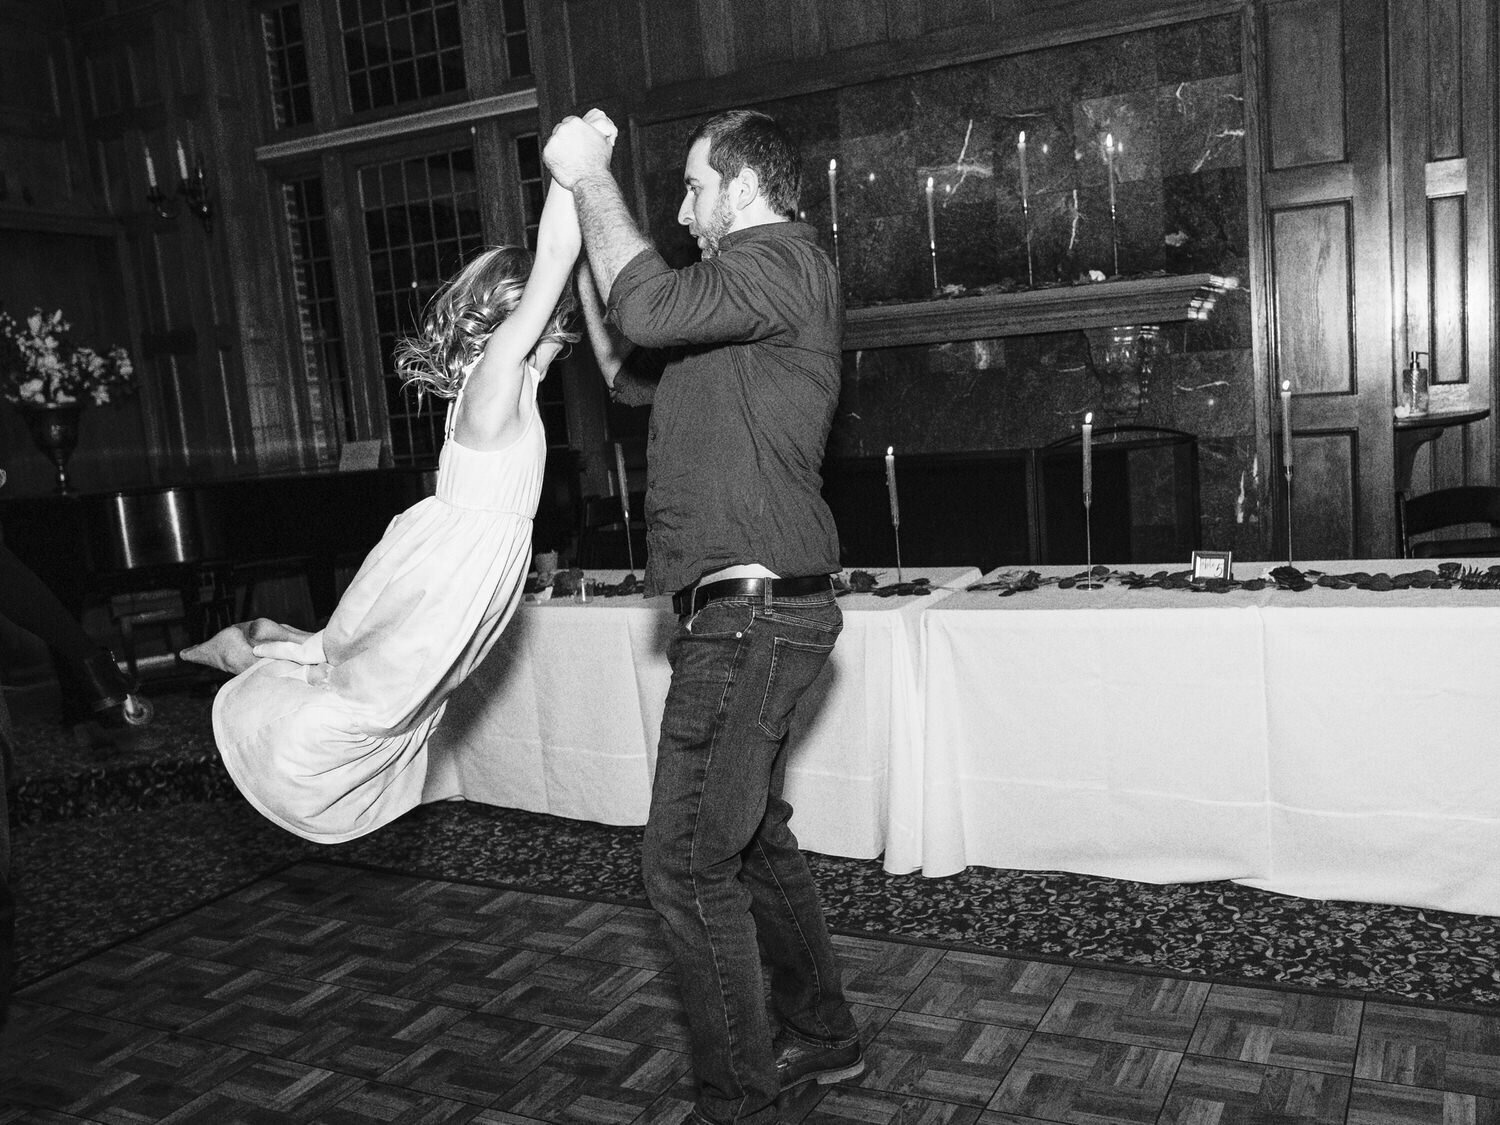 Wedding guest swings his daughter around on the dance floor